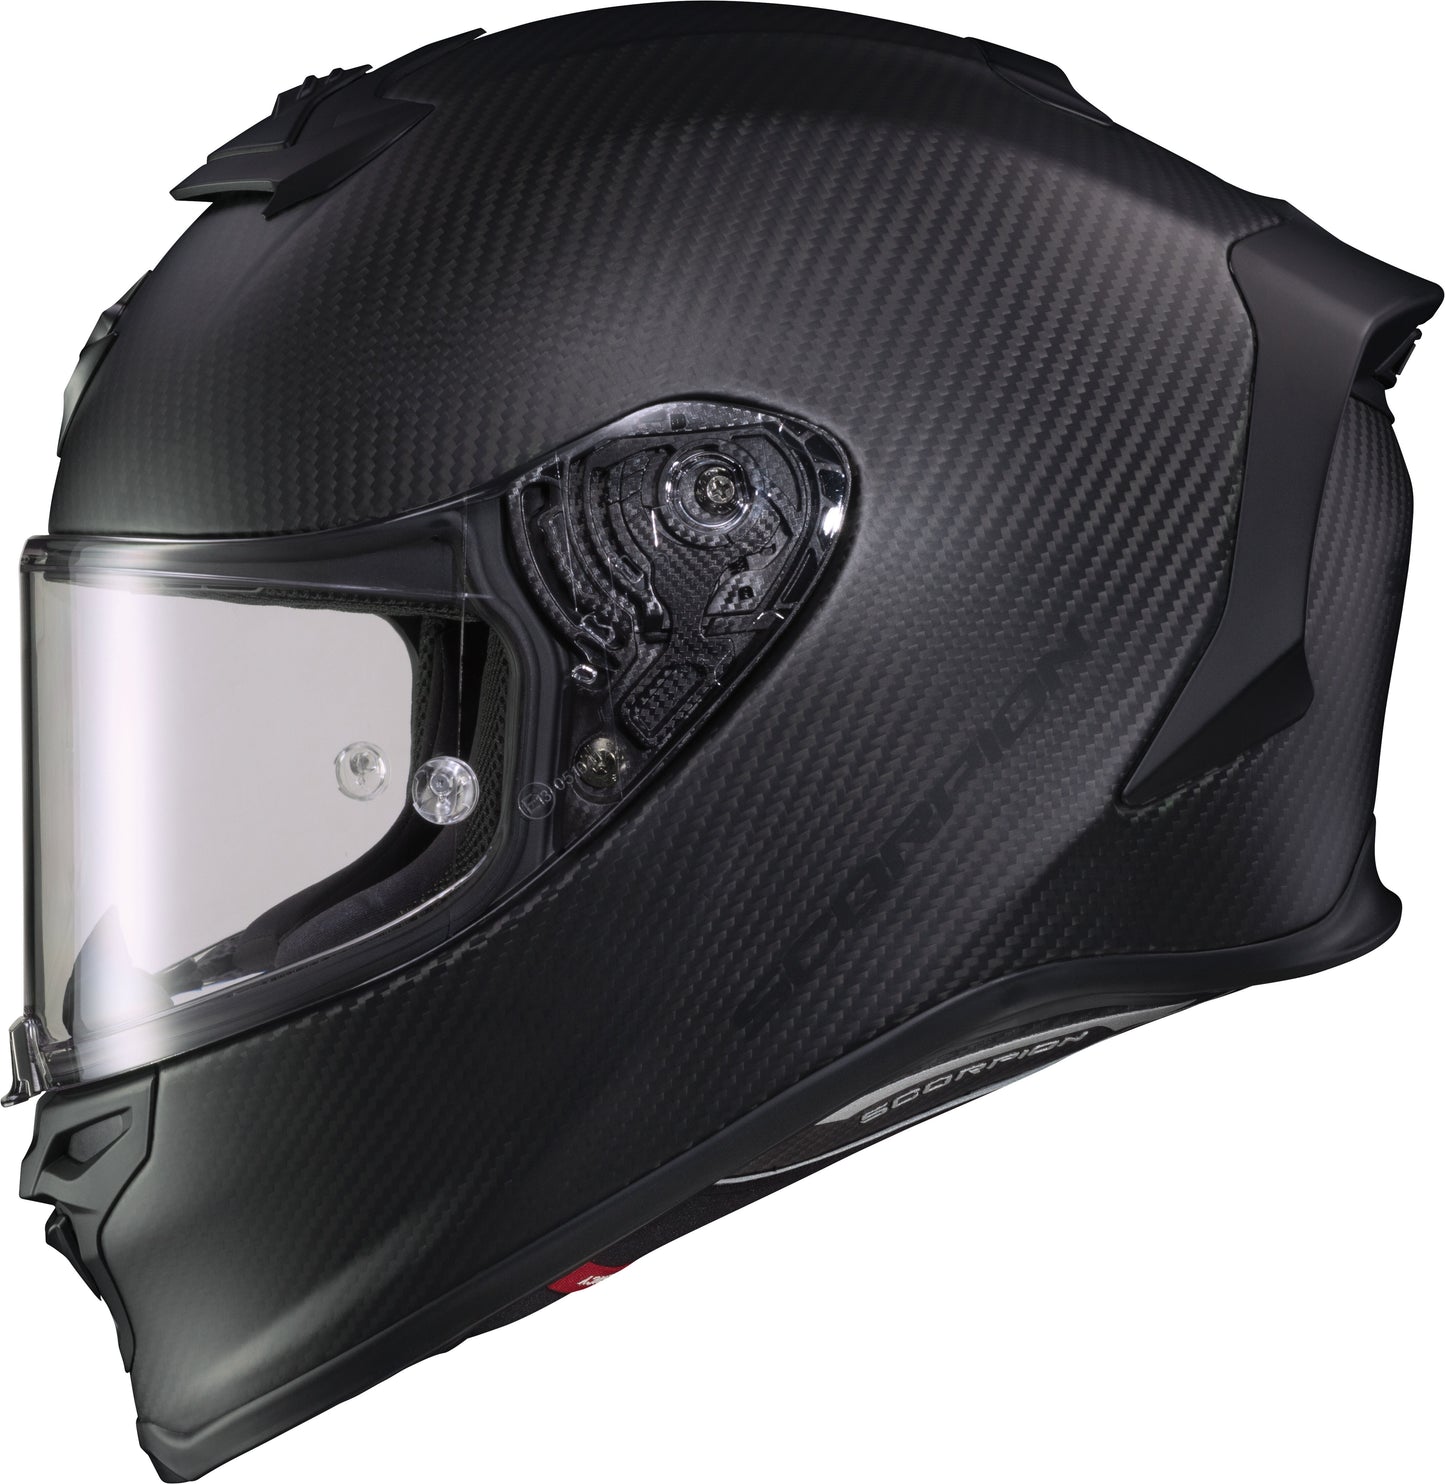 Scorpion EXO-R1 LE 'Air' Carbon Matte Black Full Face Helmet